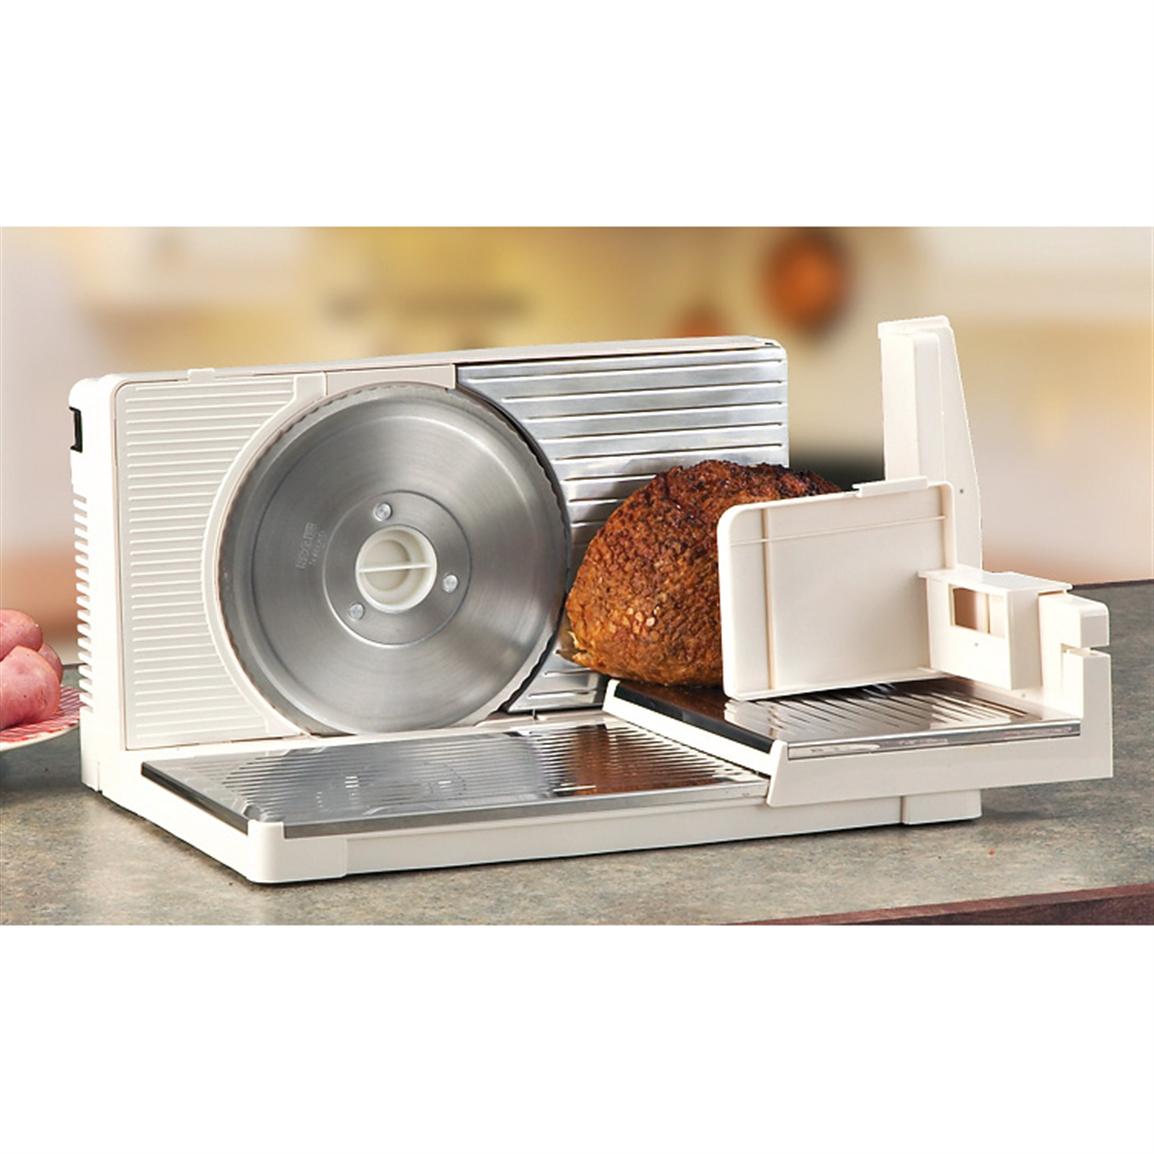 Bosch® Electric Food Slicer - 137139, Kitchen Appliances at Sportsman's